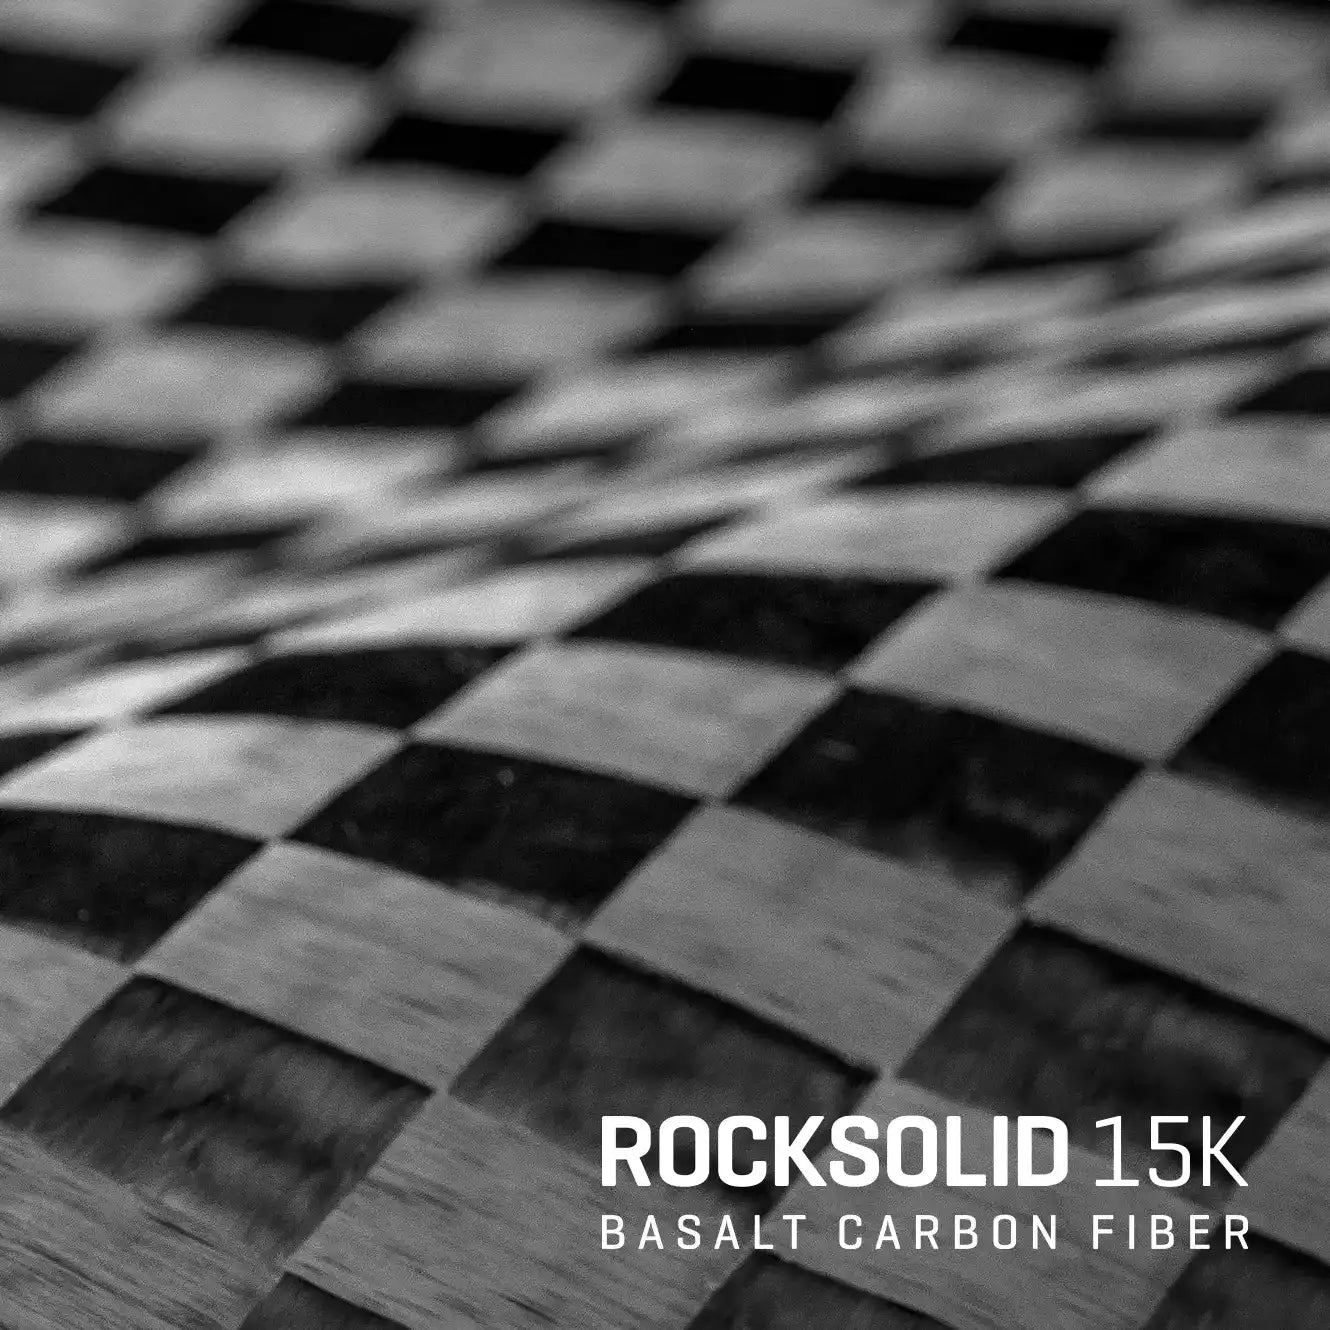 Rocksolid Basalt Carbon  Fiber 15K - pallap racket technologies - padel sport brand